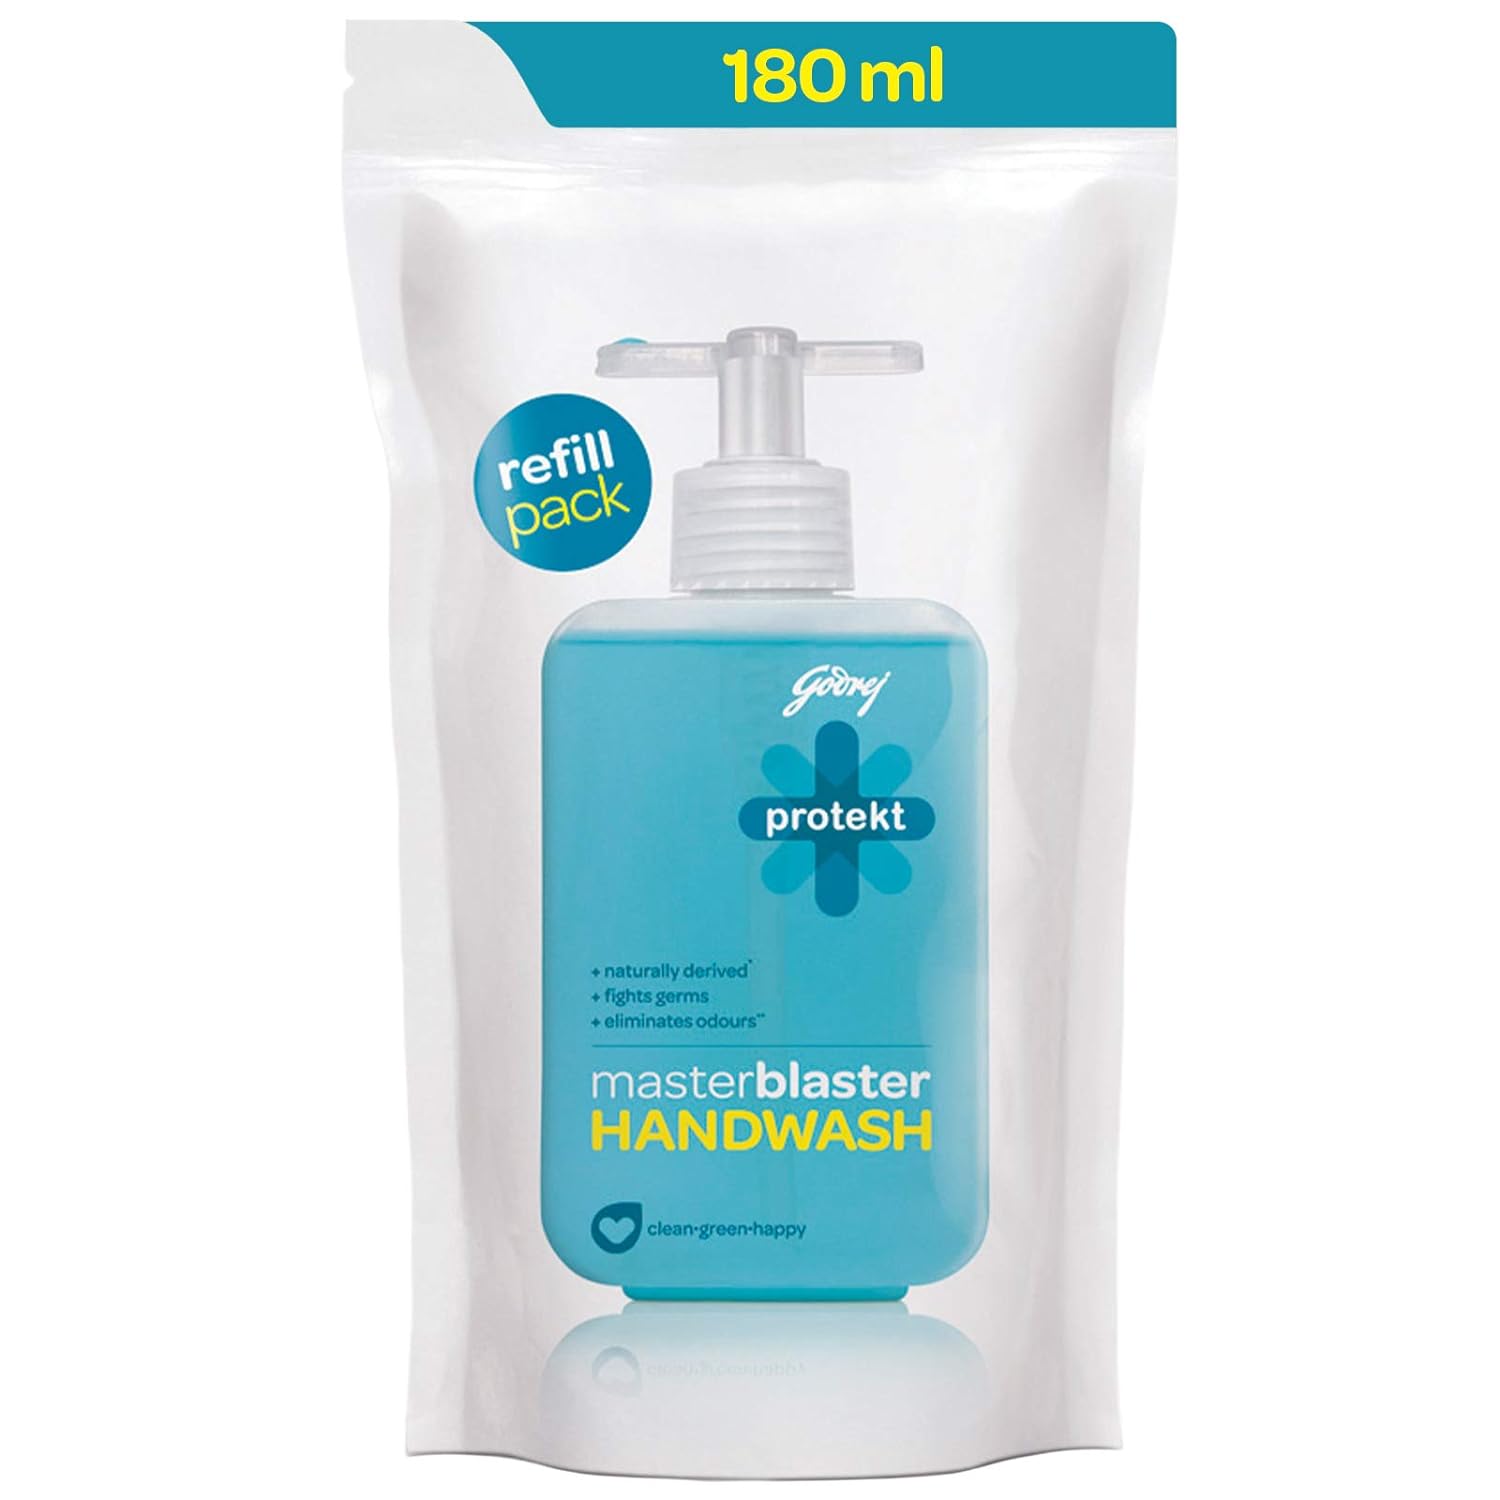 Godrej Protekt Germ Fighter Handwash Refill Pack | Aqua | Germ Protection & Soft on Hands - 180ml